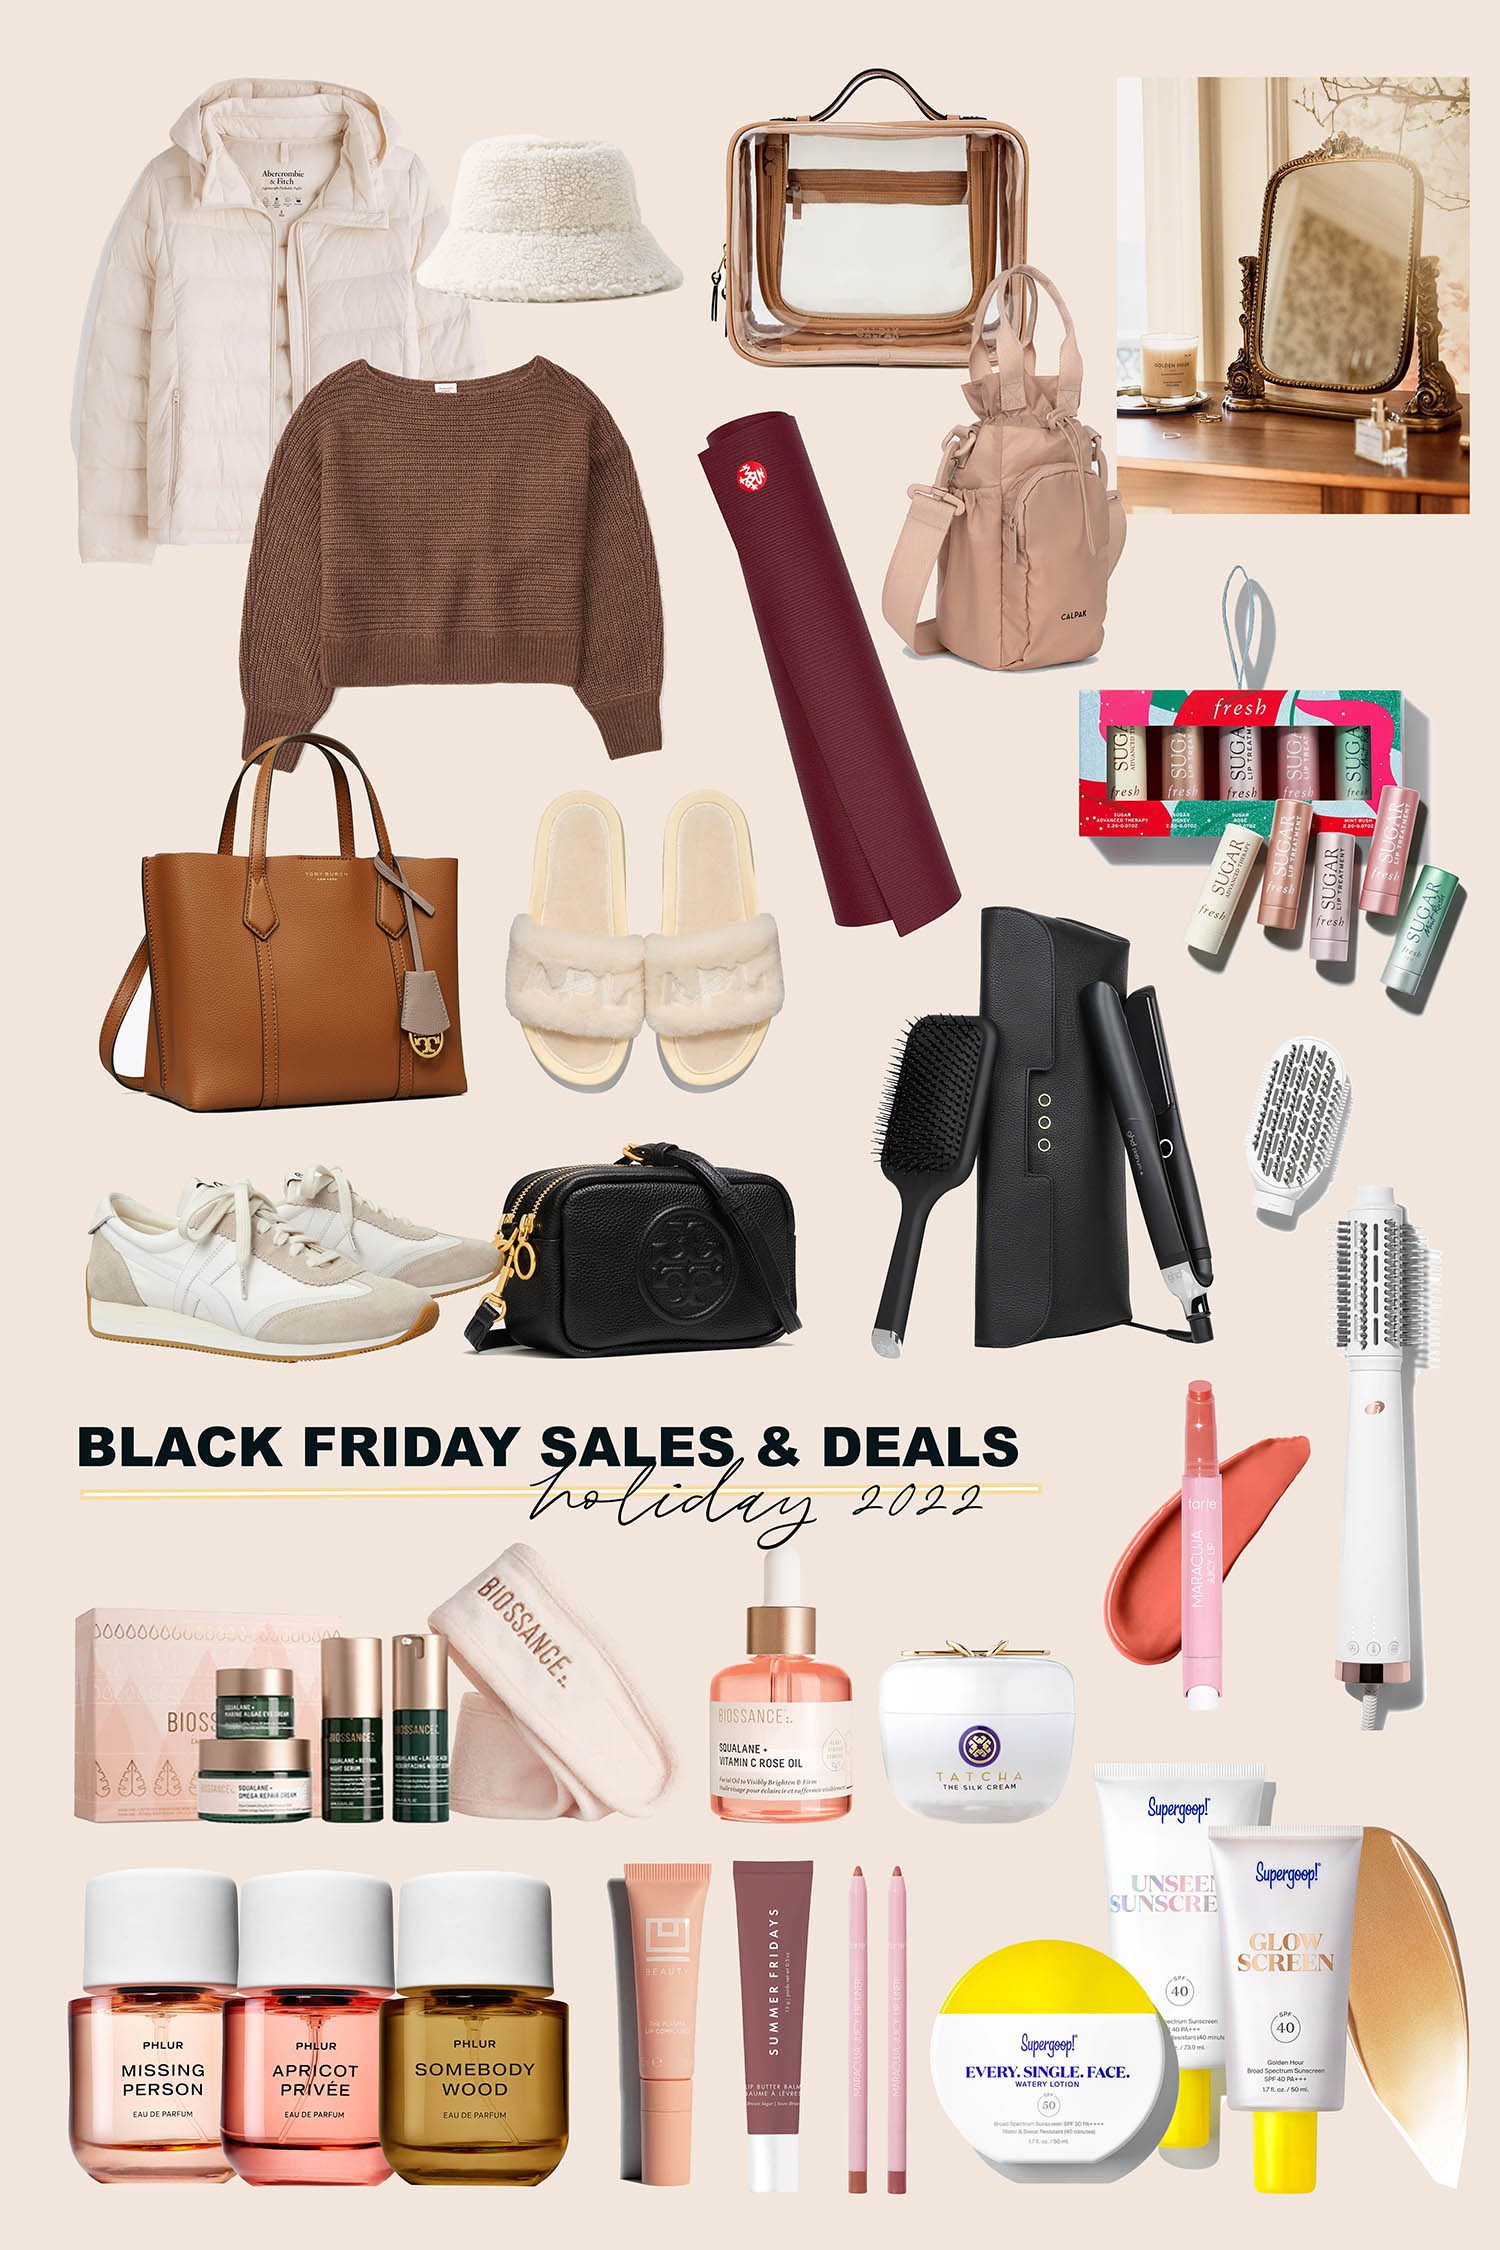 Walmart Black Friday Deals: 55+ Deals You Can Shop Right Now - CNET